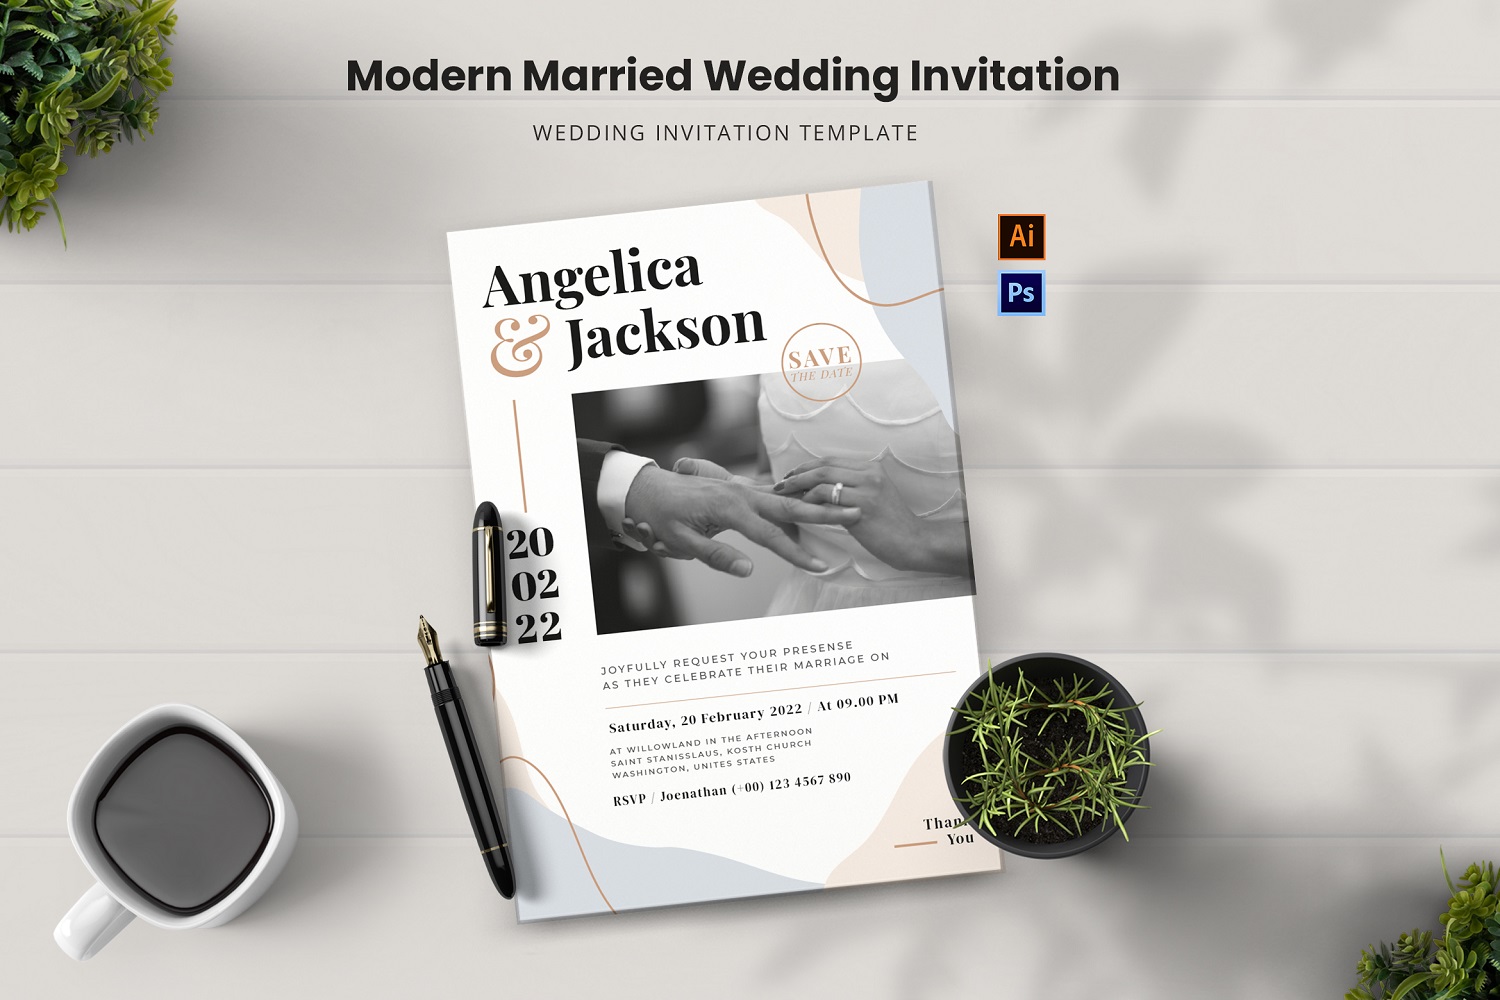 Modern Married Wedding Invitation